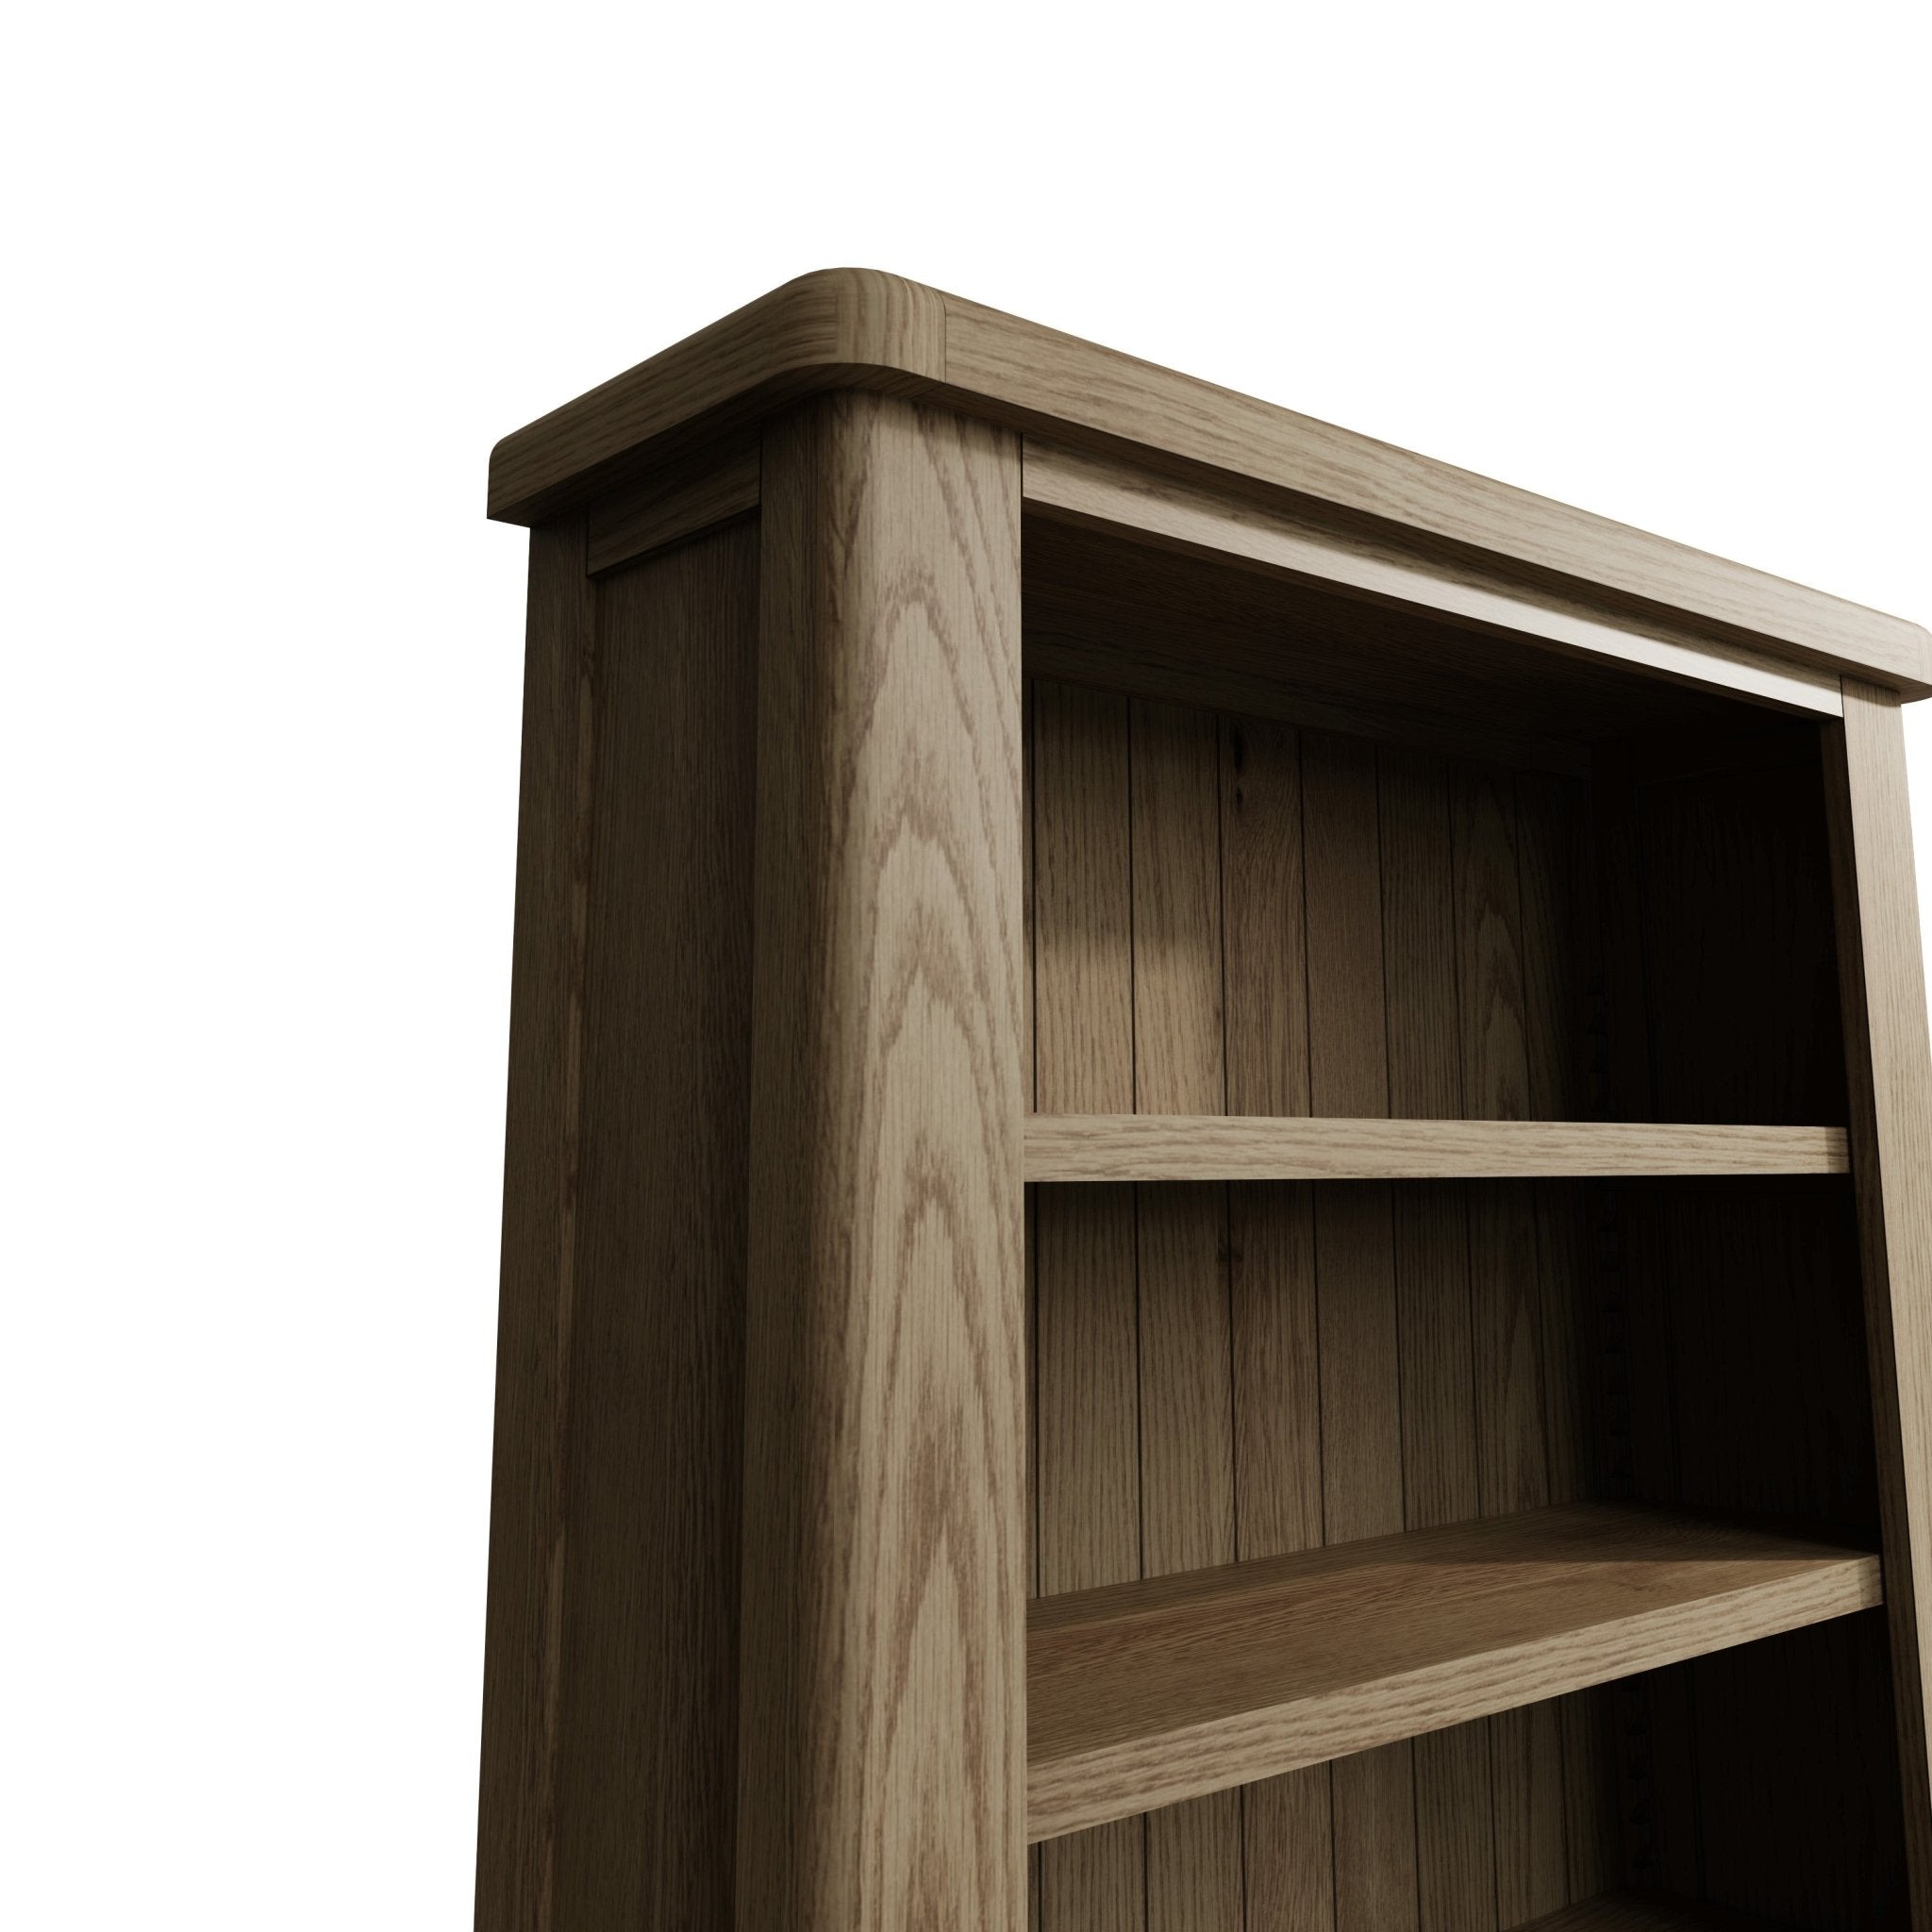 Rusper Oak Large Bookcase with Baskets - Duck Barn Interiors